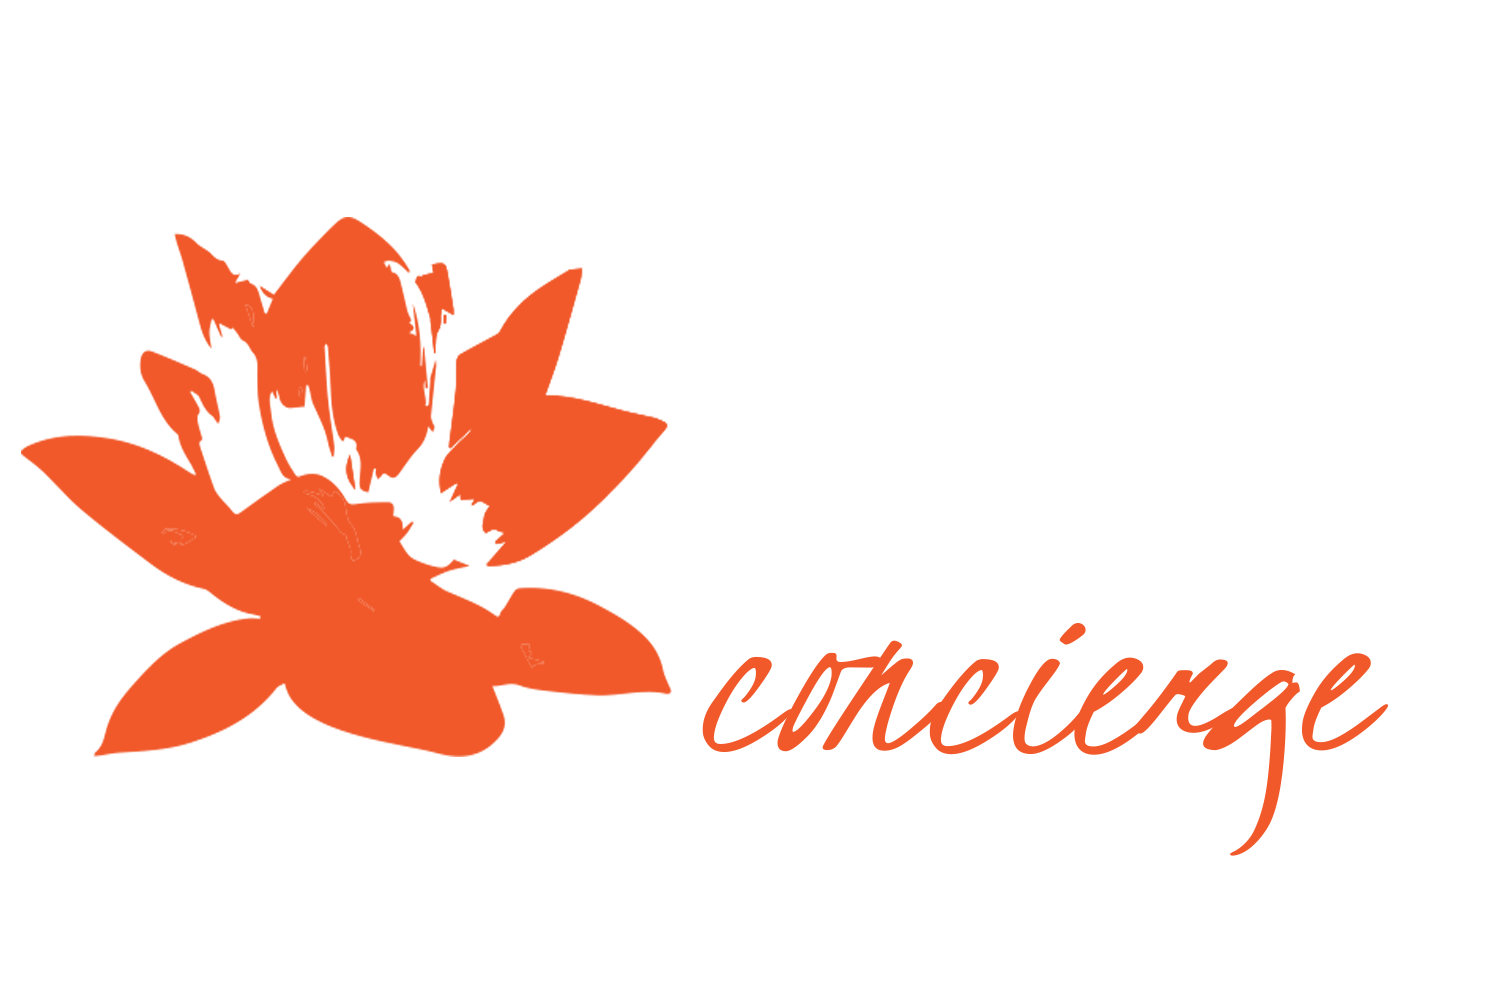 Telluride Spa Concierge